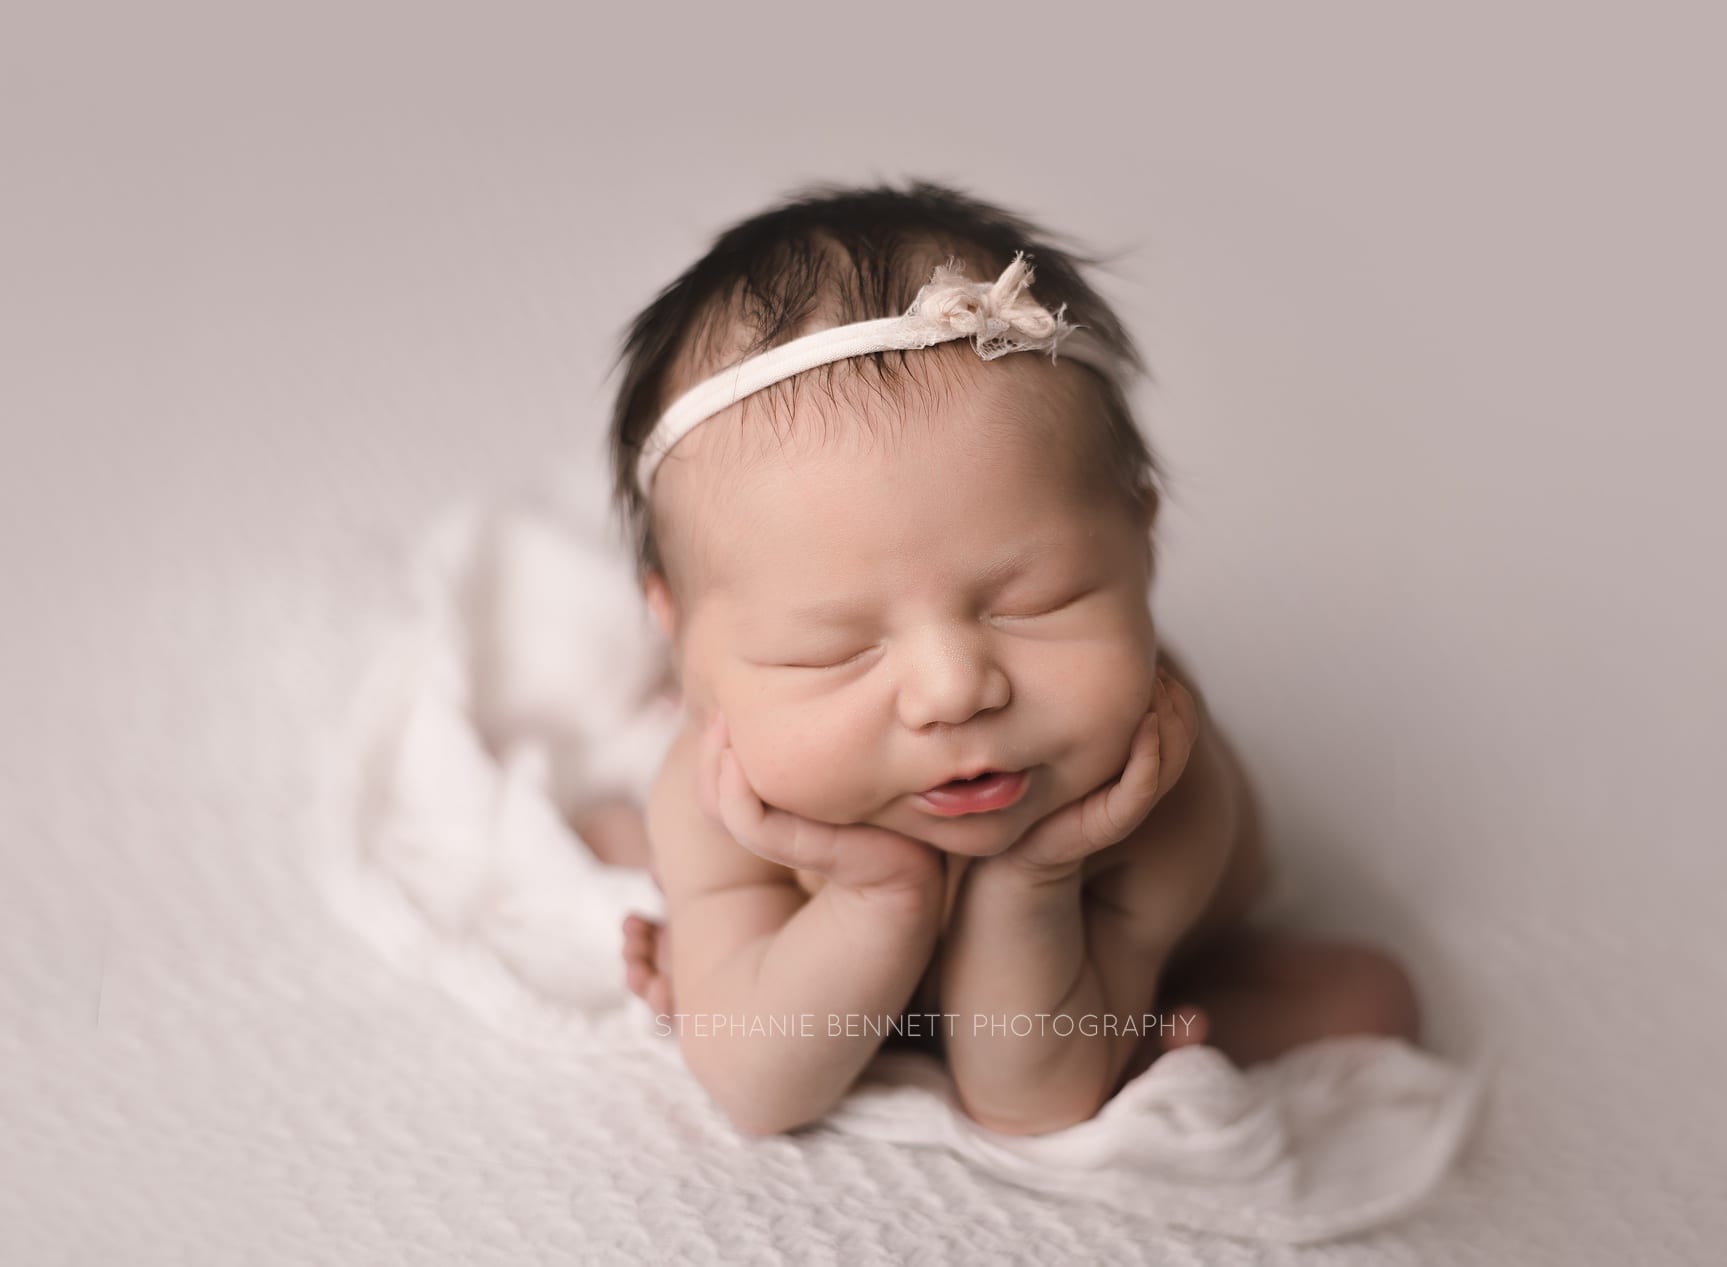 Best newborn pictures near minneapolis